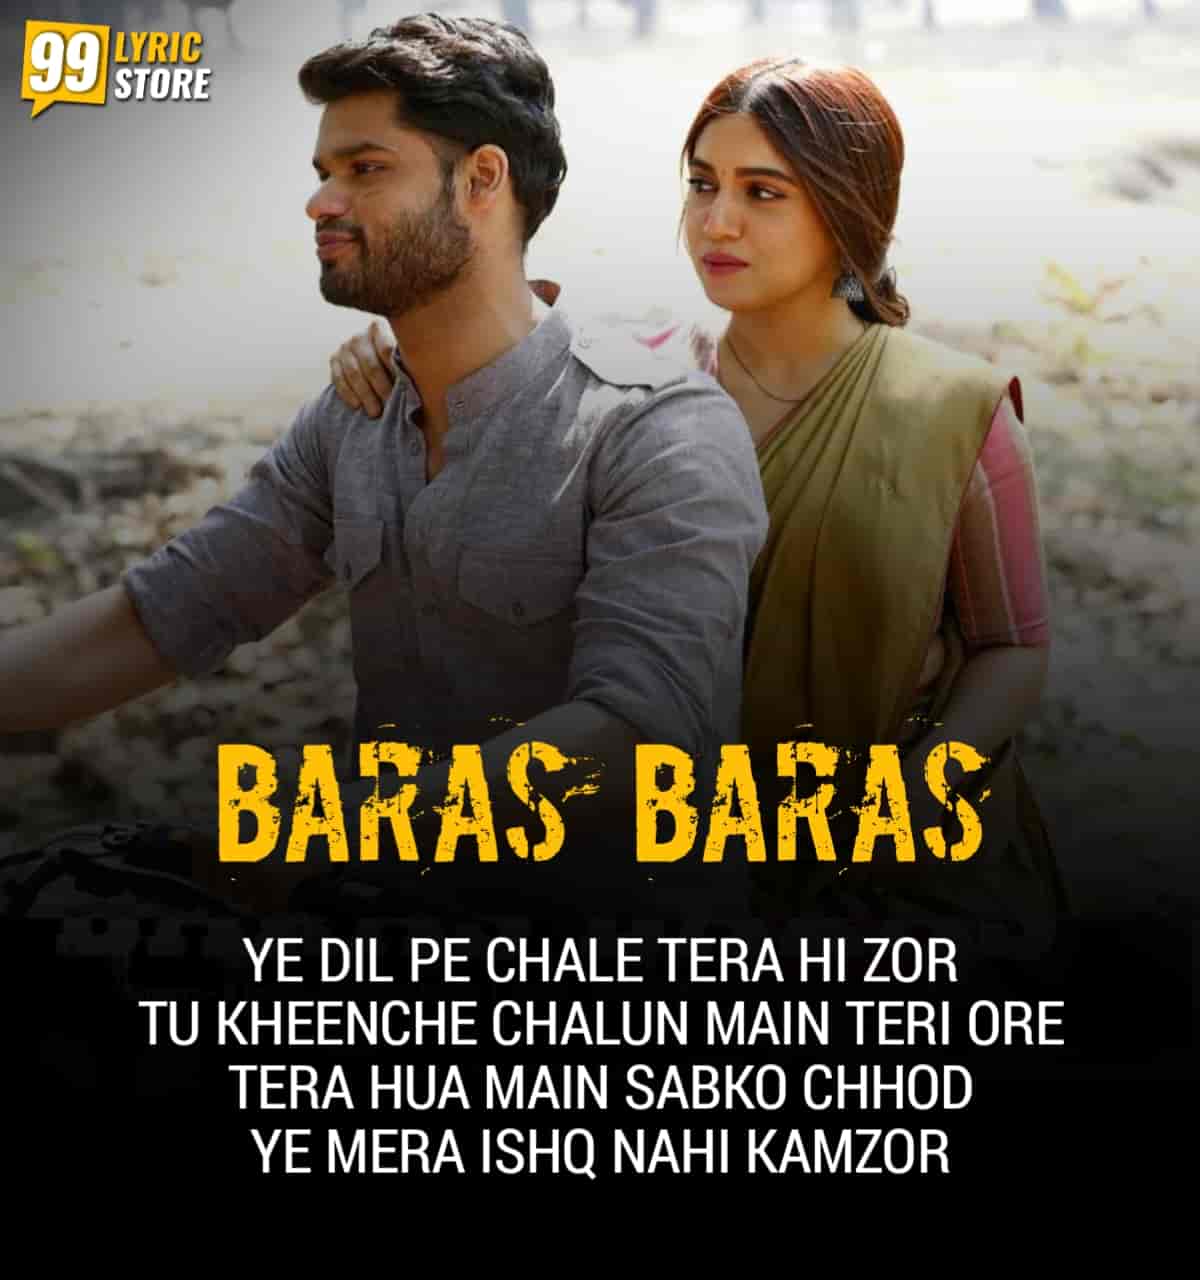 Baras Baras Hindi Song Image Features Bhumi Padnekar from movie Durgamati